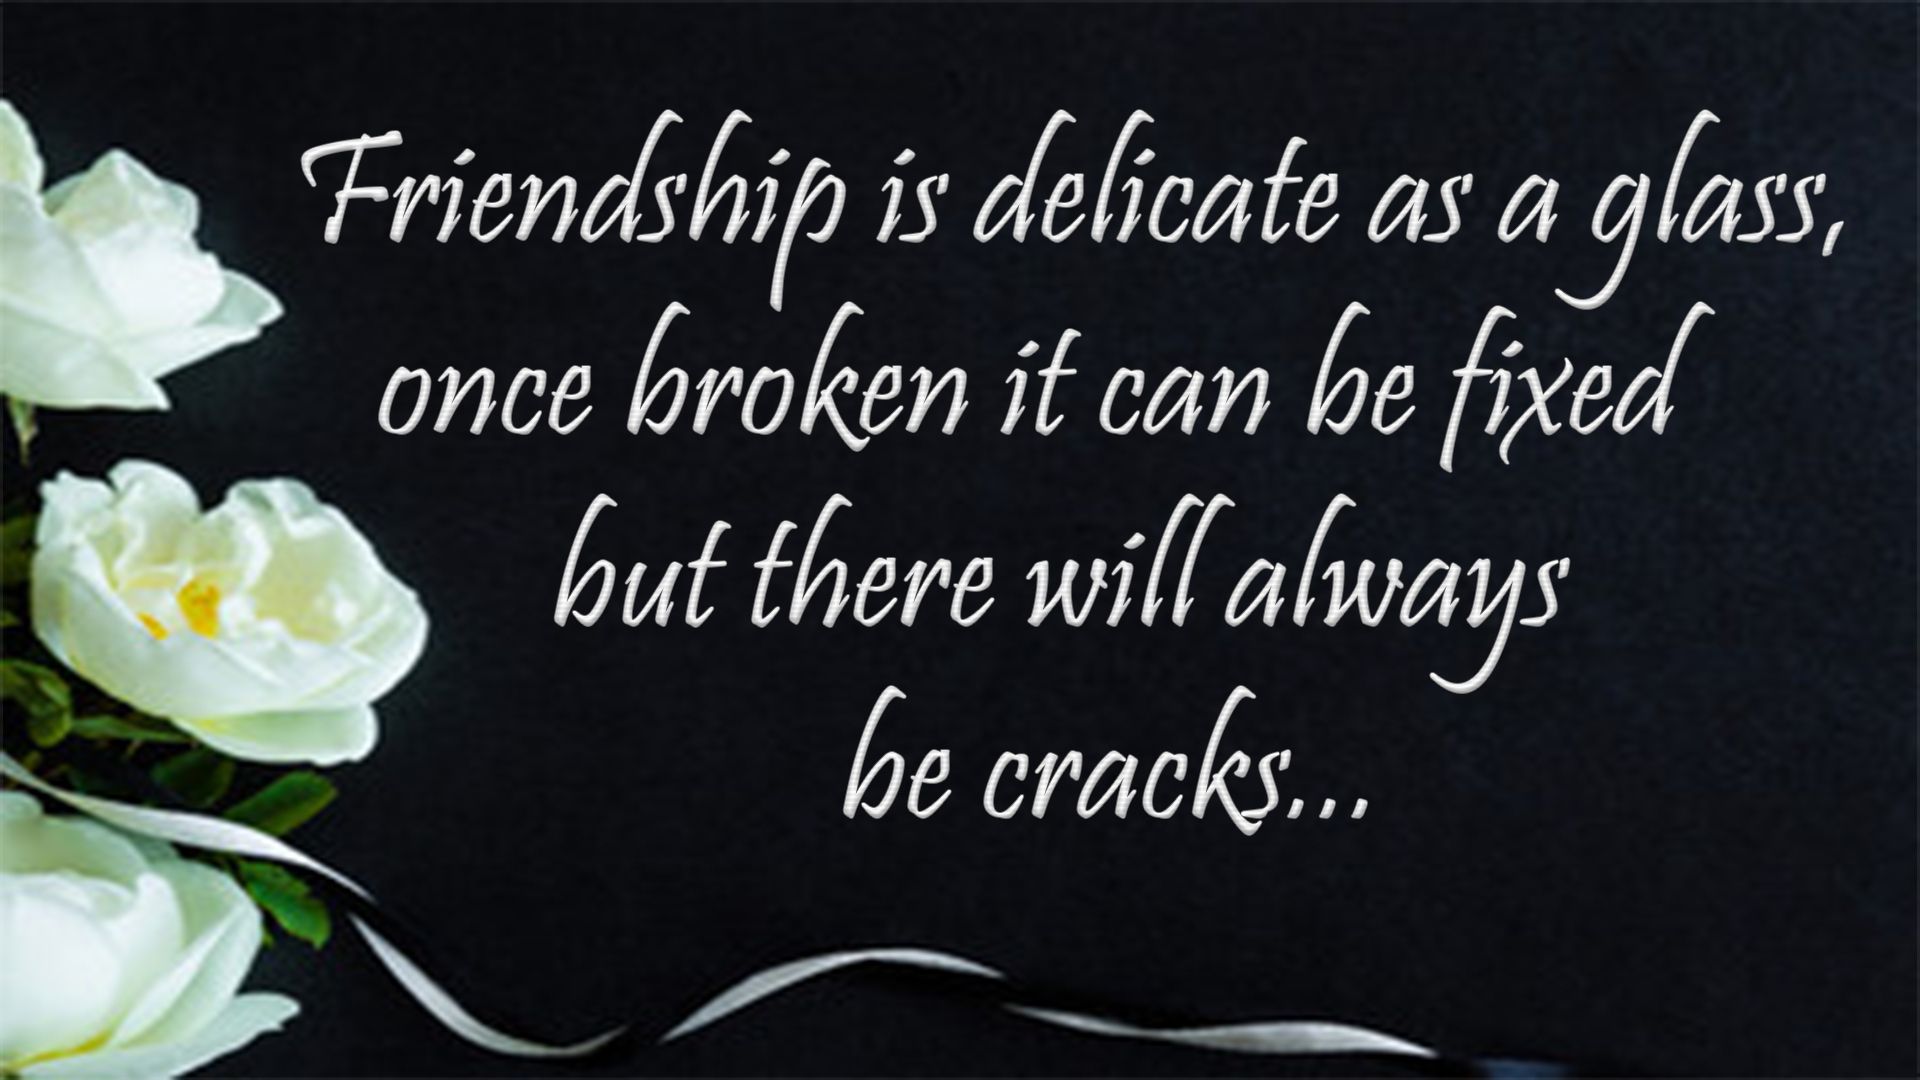 Sad Broken Friendship Quotes Image. Friendship Breakup Quotes